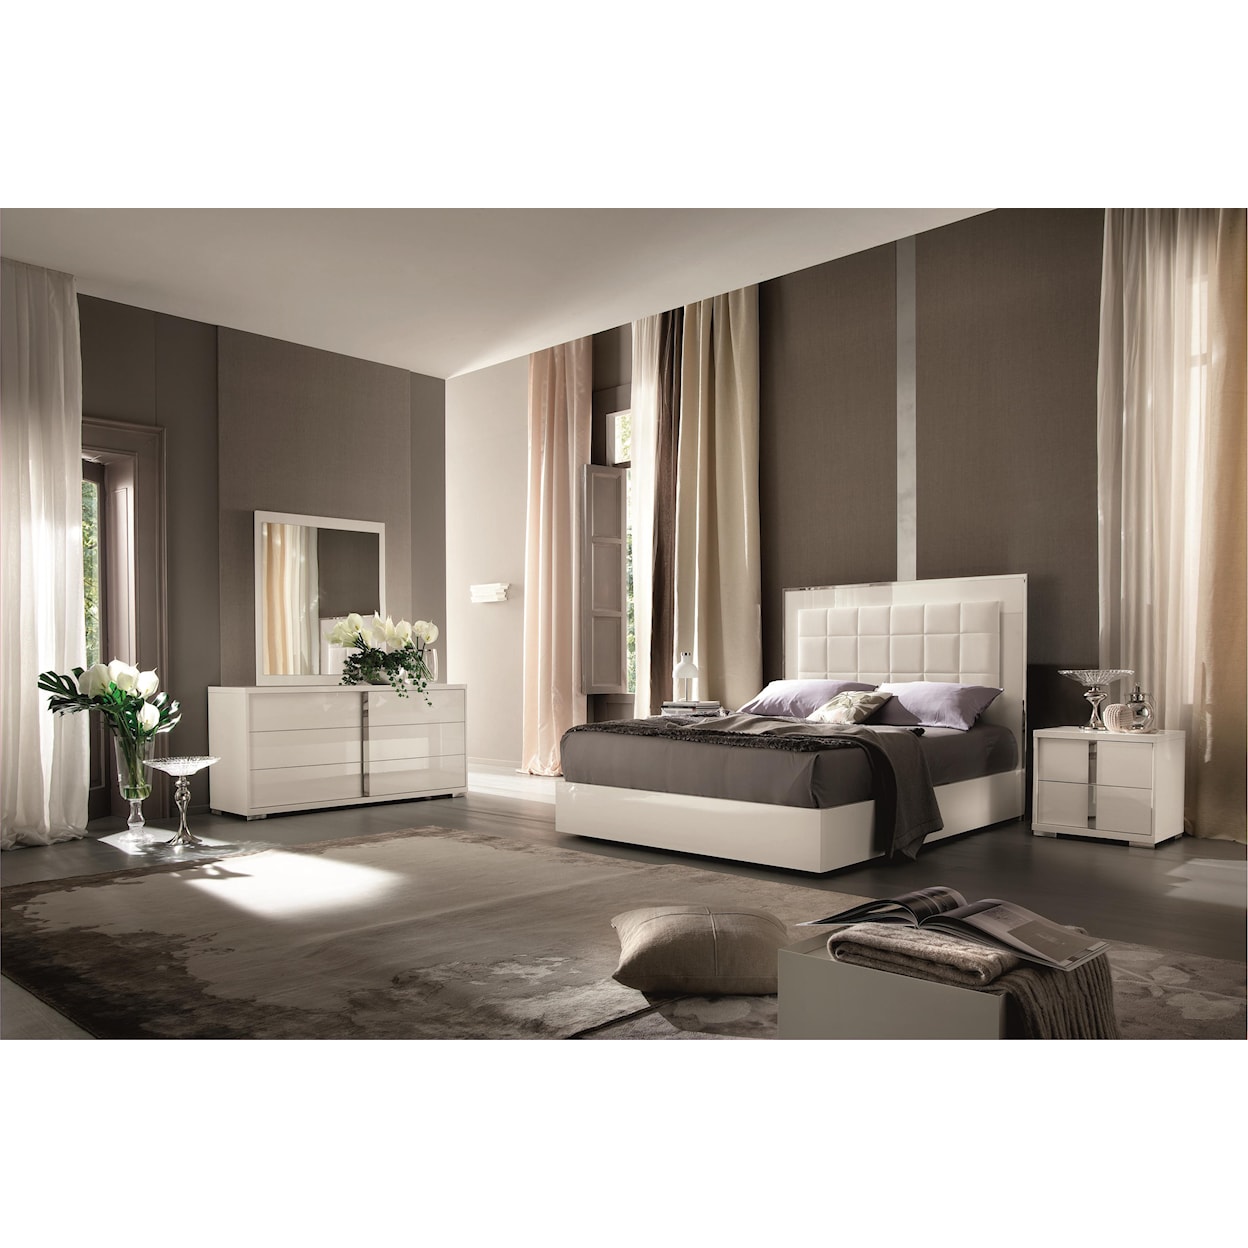 Alf Italia Imperia King Bedroom Group